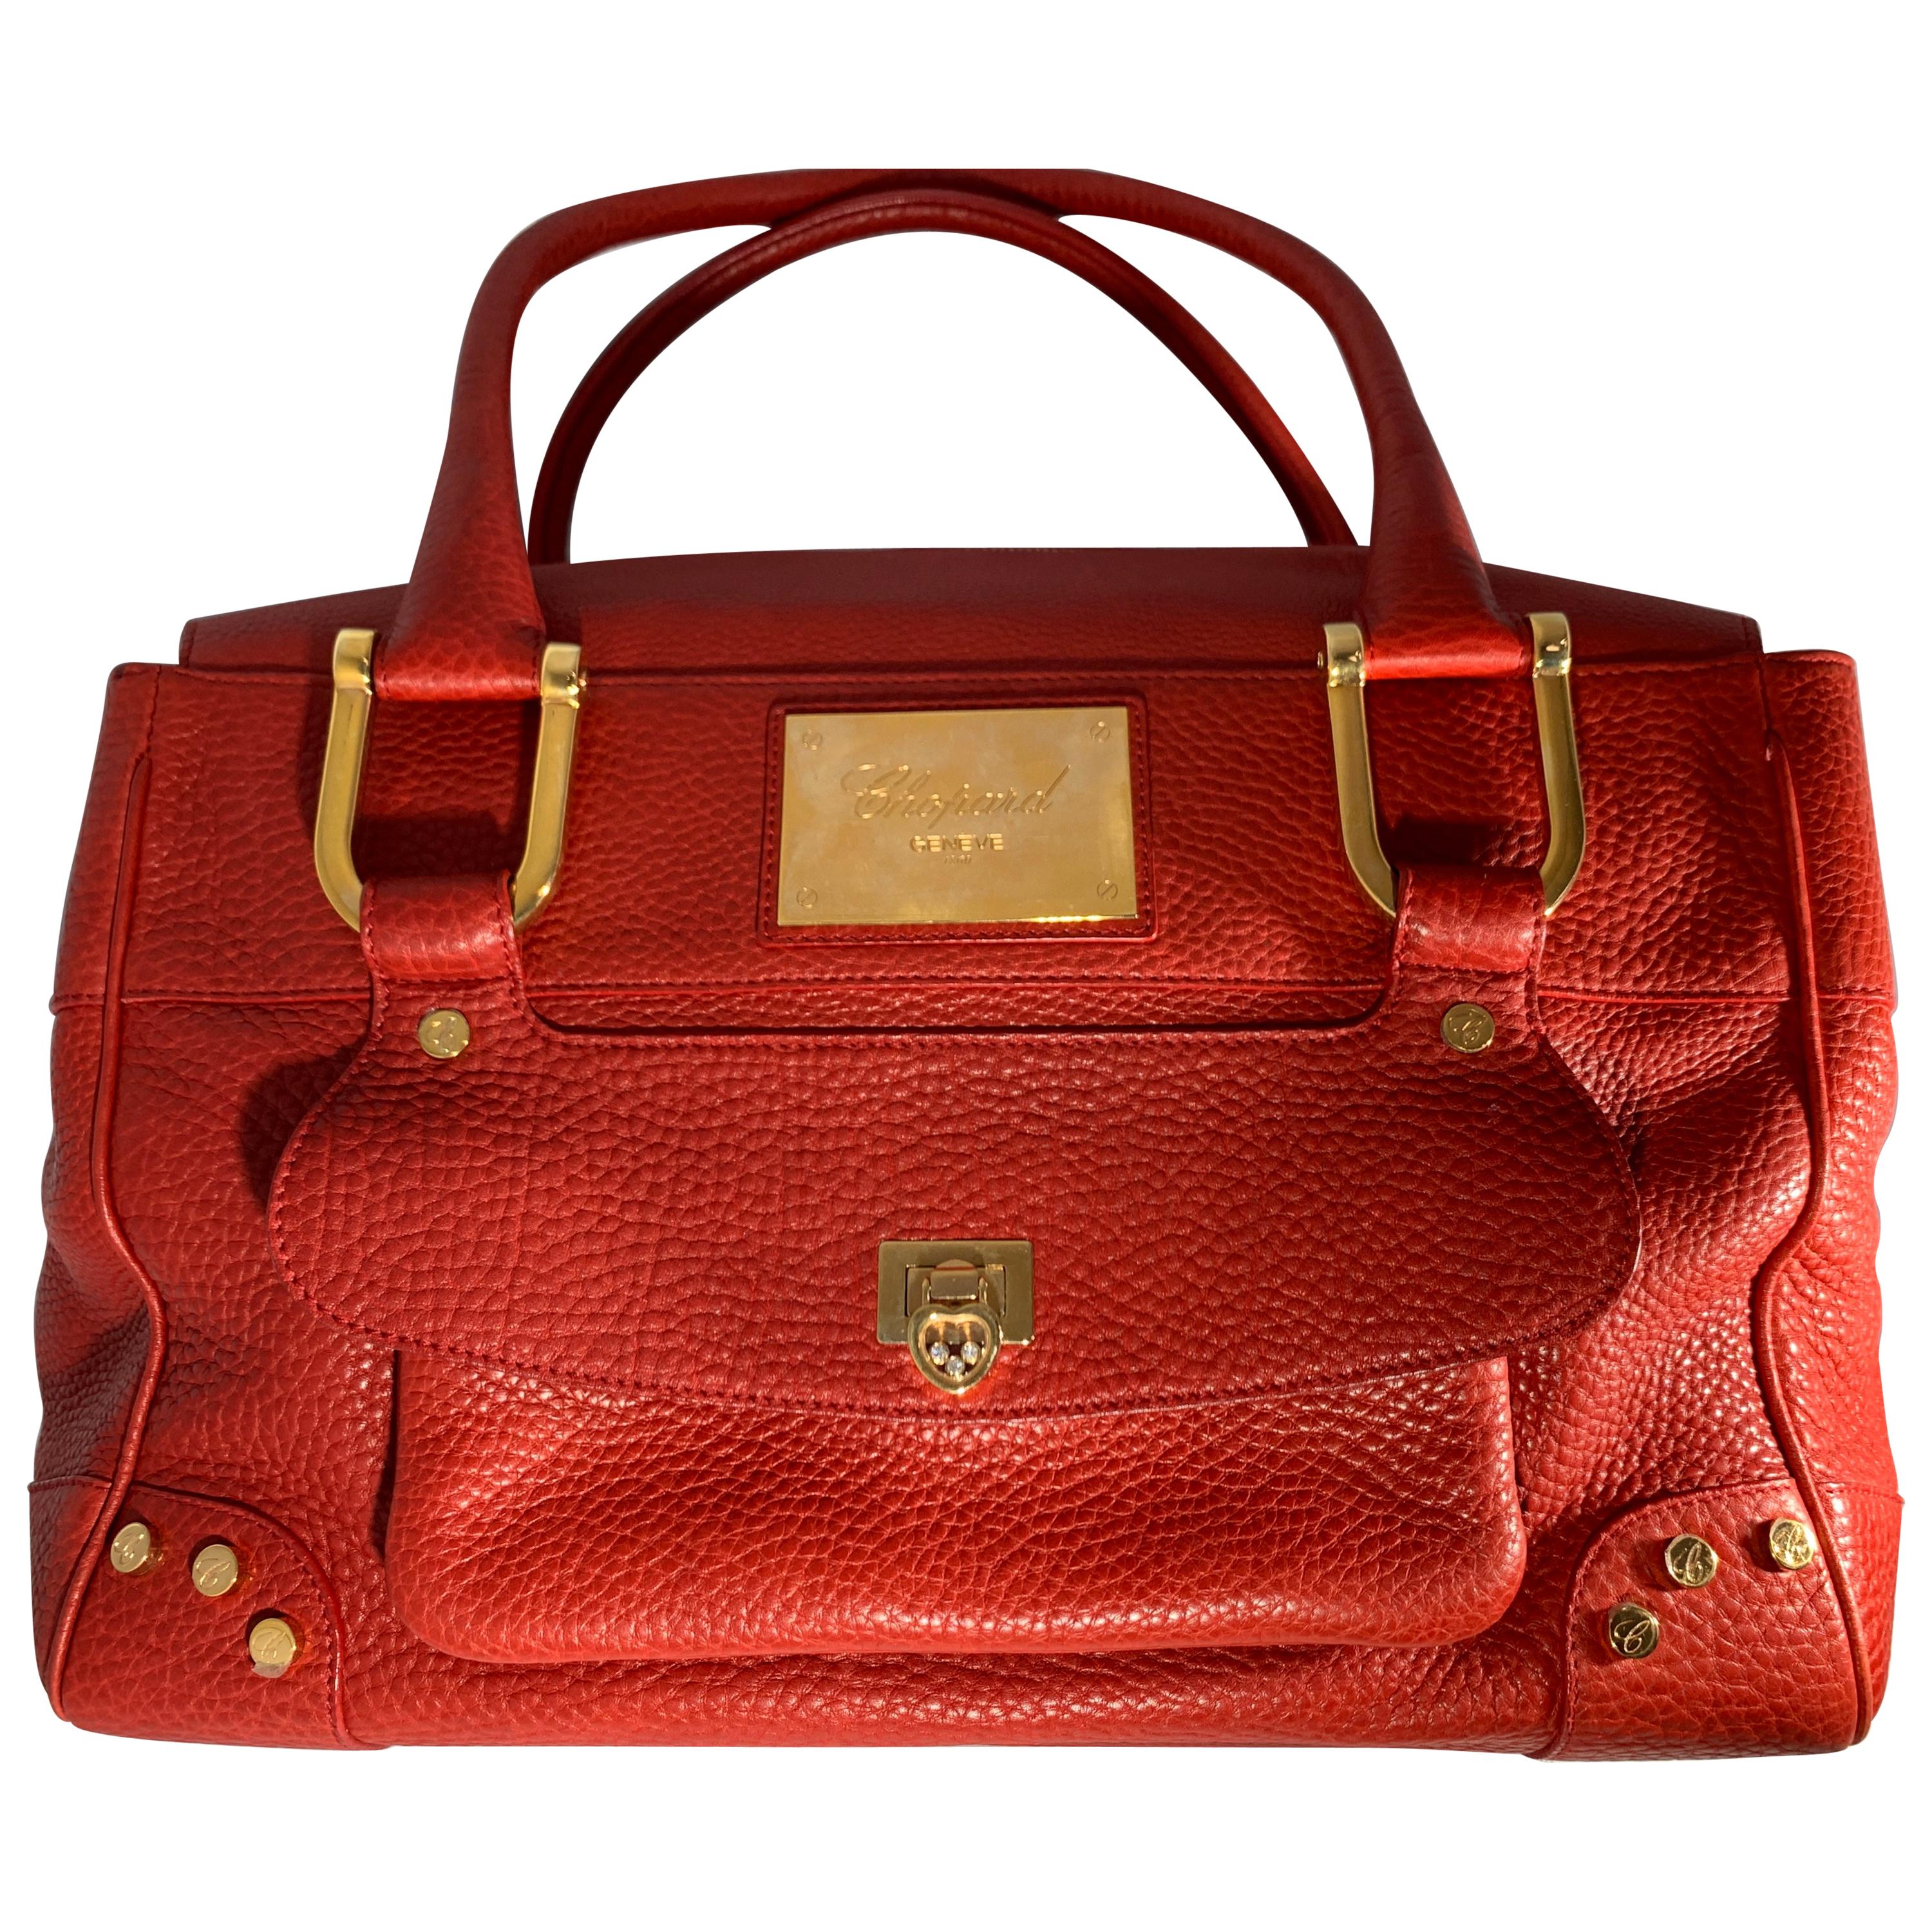 Chopard Red Leather Large Handbag,  happy diamond series heart closure. 